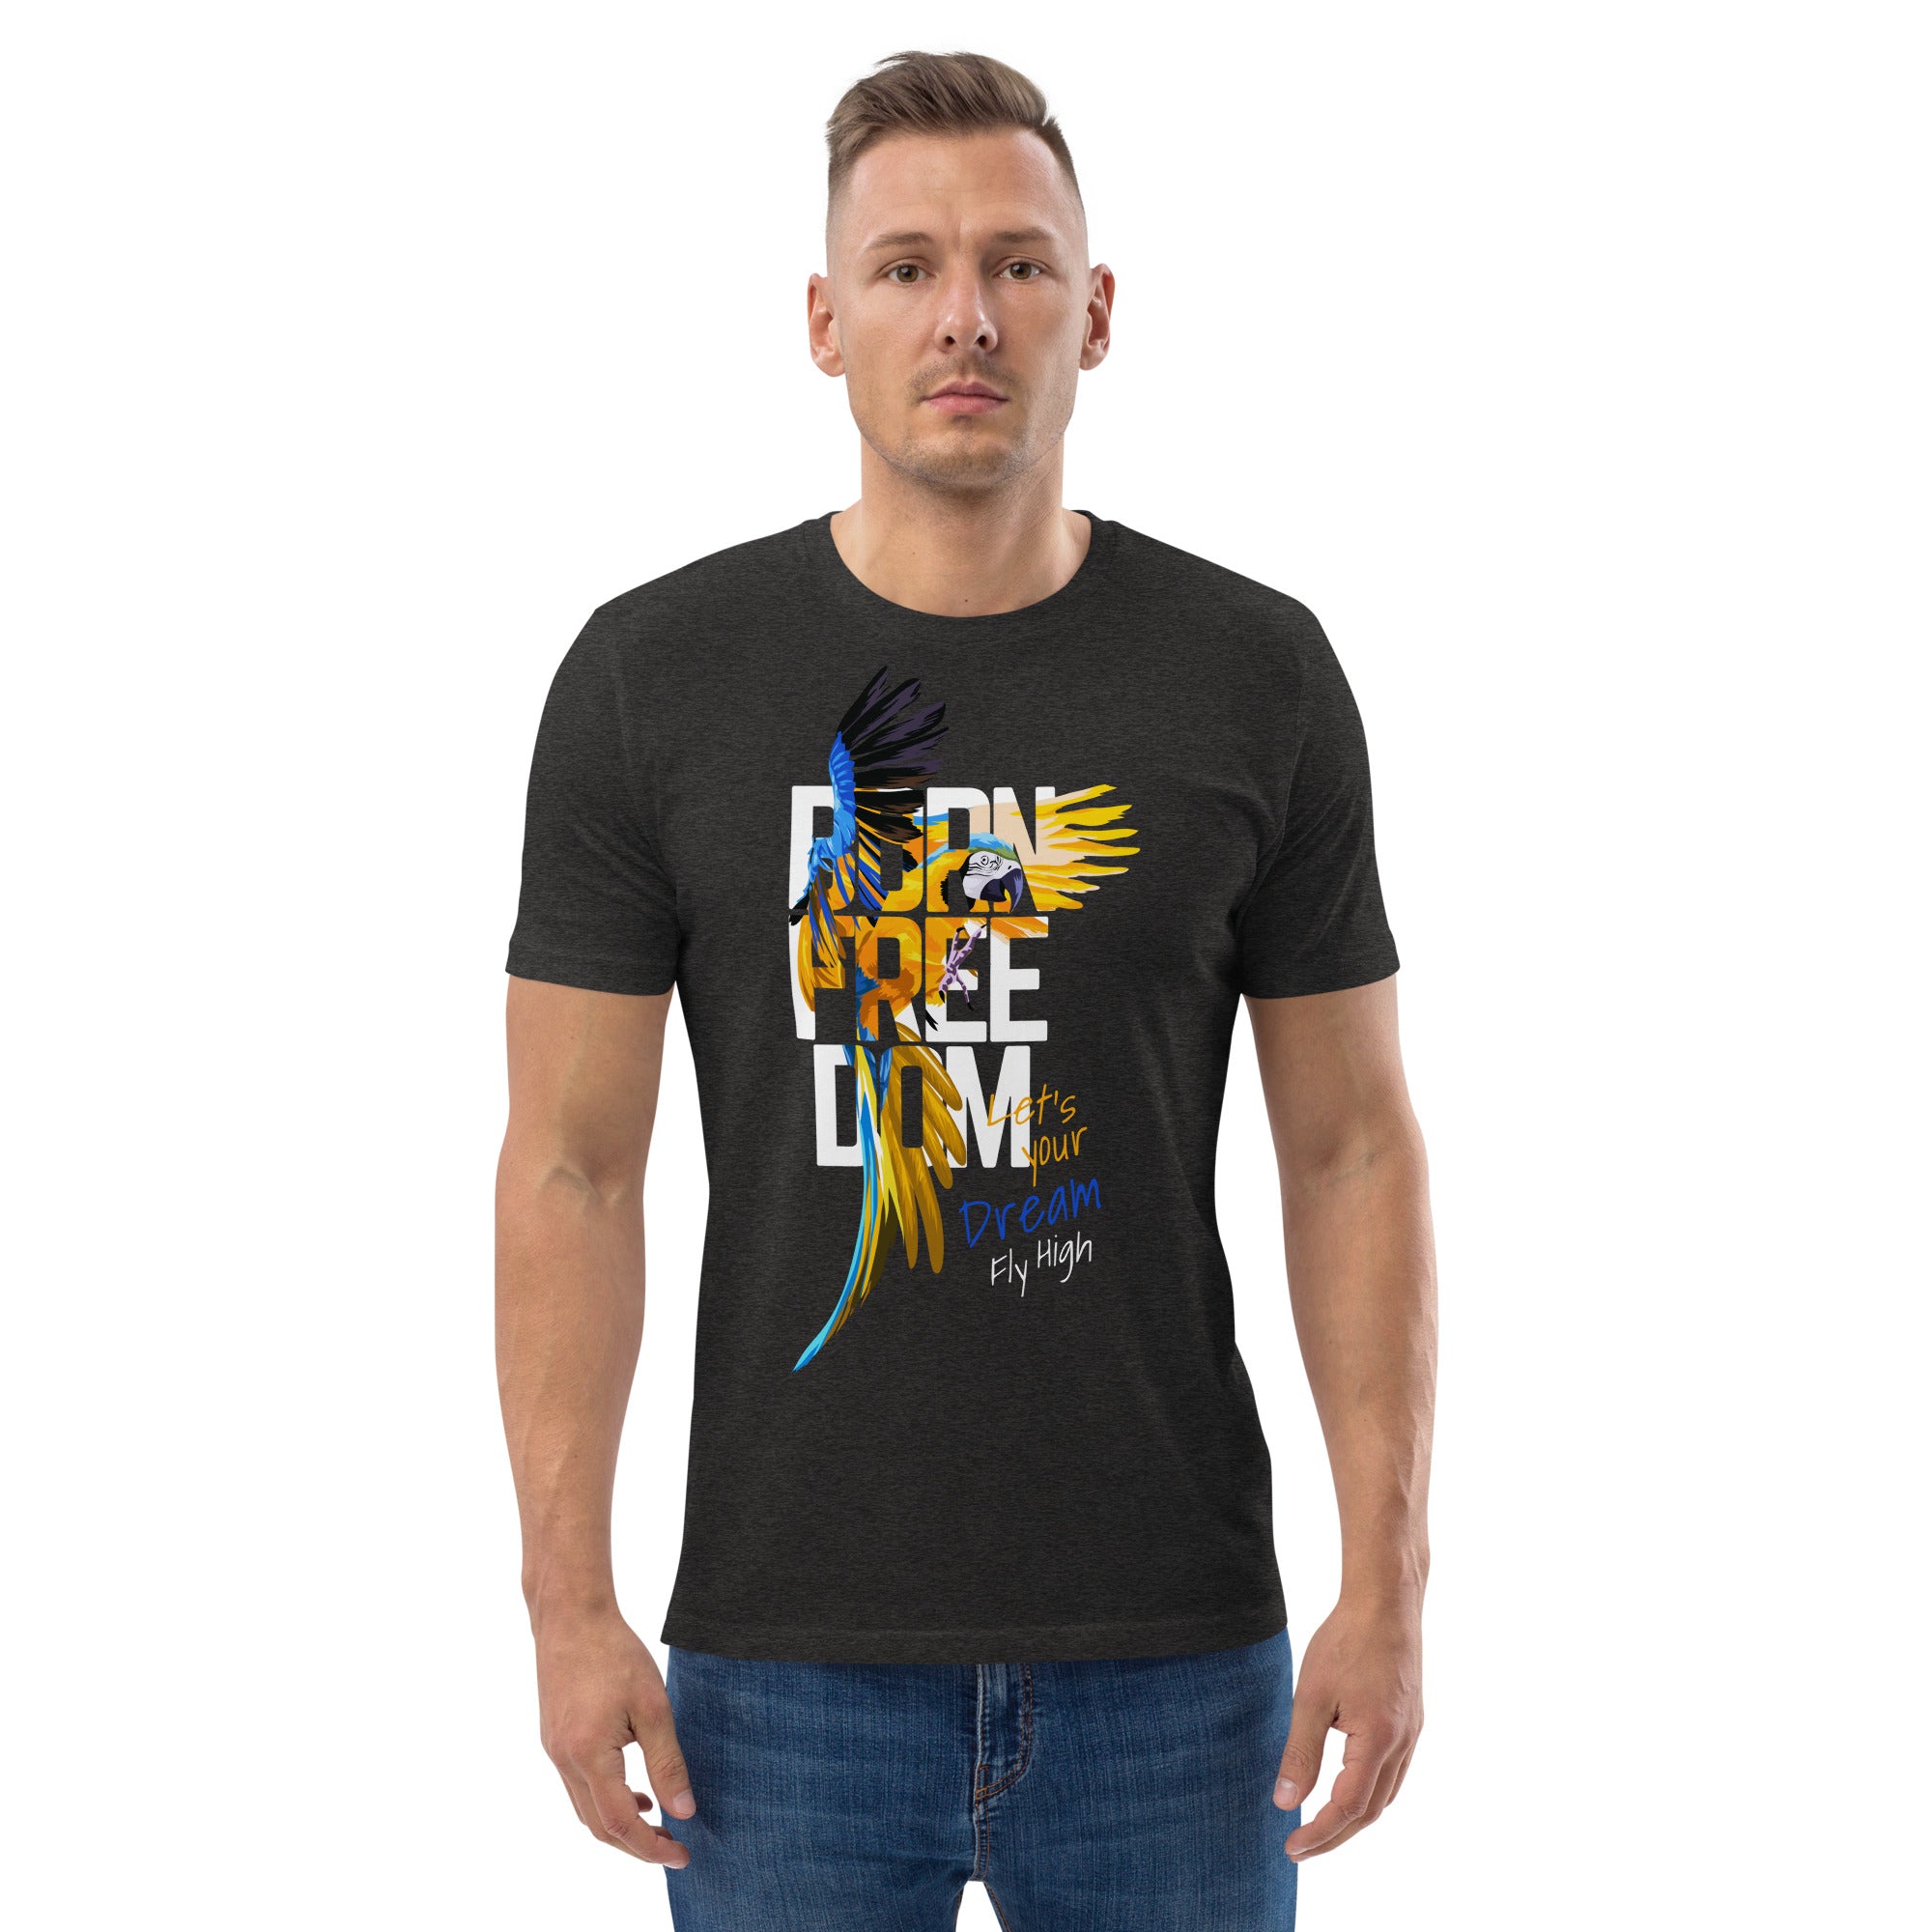 Born Freedom Unisex cotton t-shirt